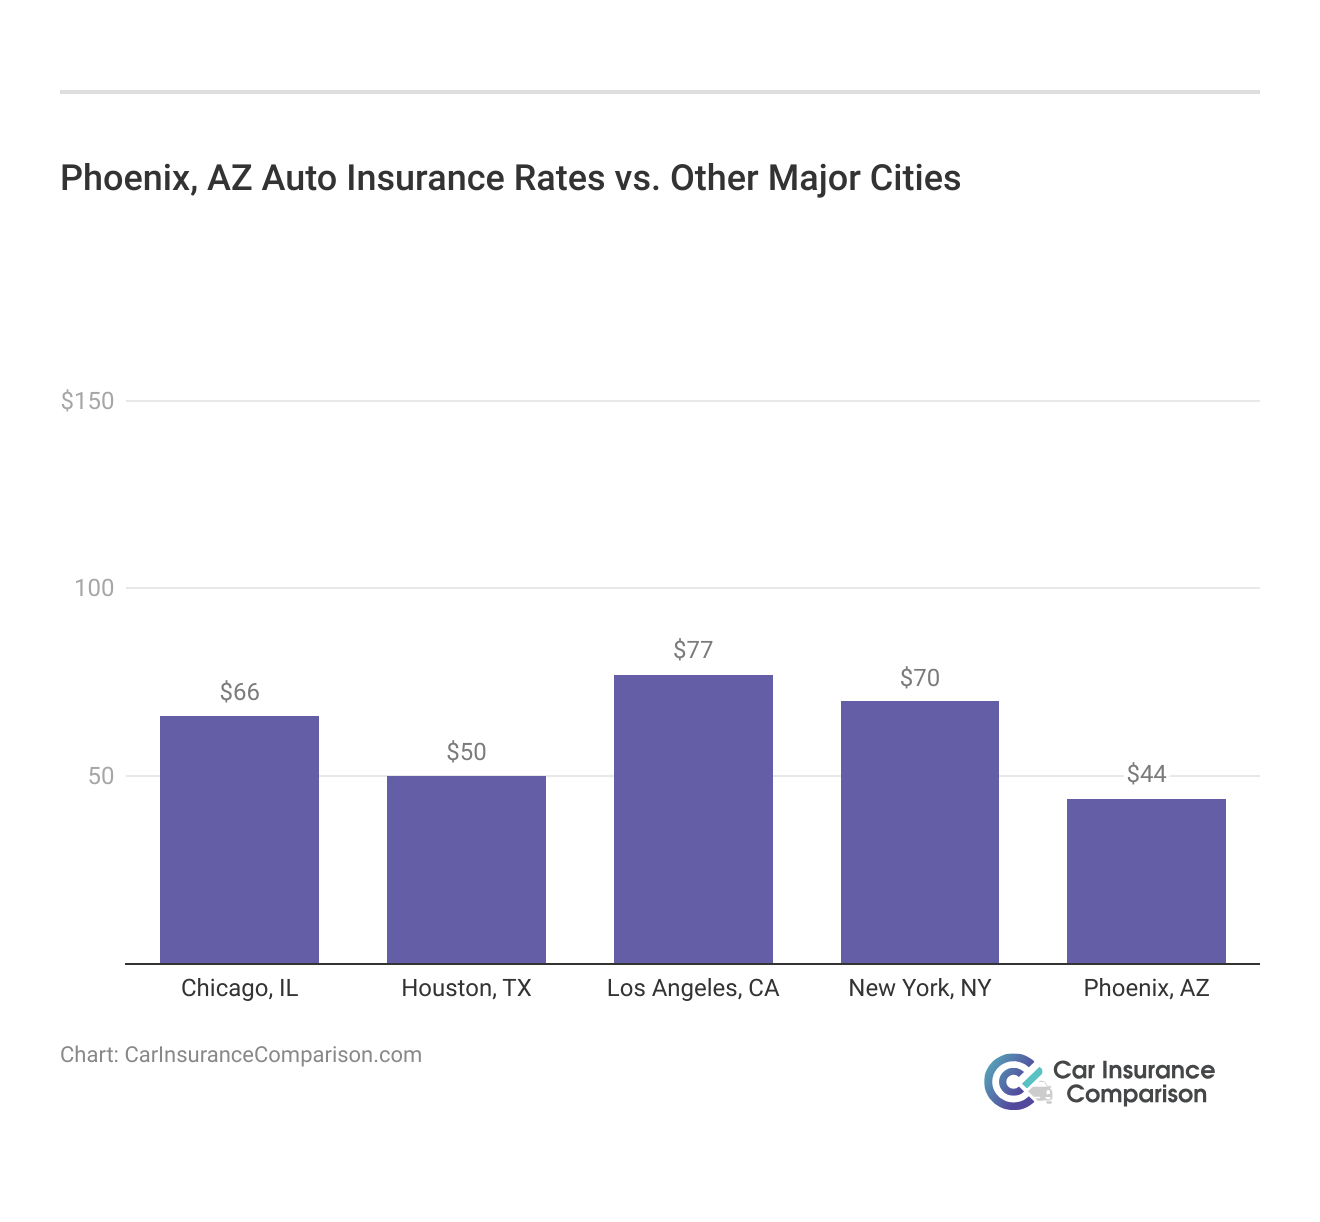 <h3>Phoenix, AZ Auto Insurance Rates vs. Other Major Cities</h3>